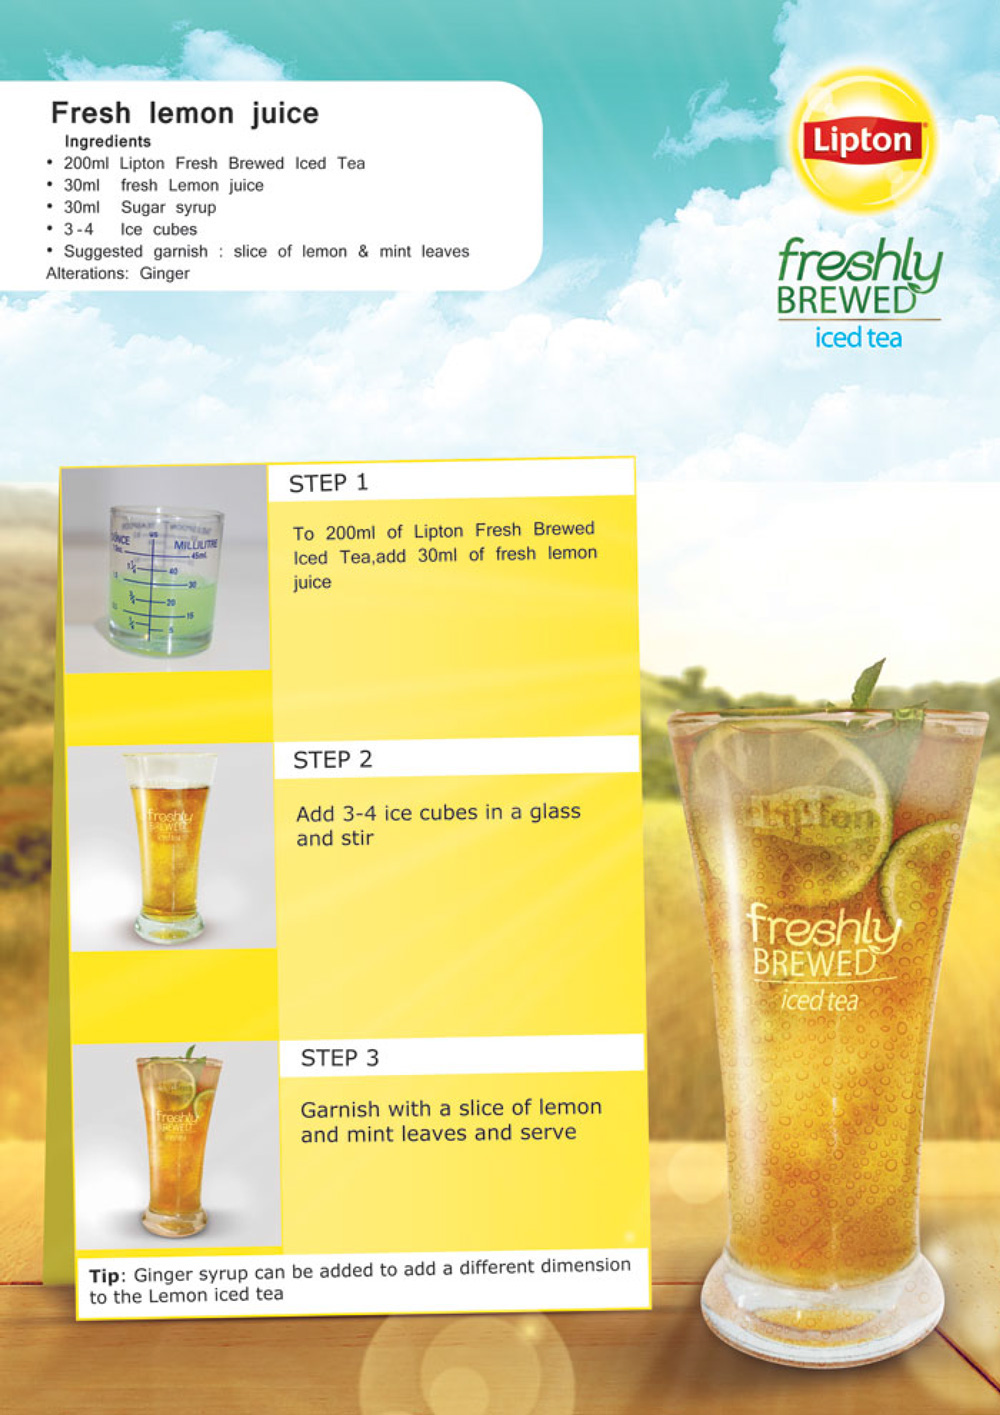 Lipton Fresh Brewed Iced tea Lipton markade Unilever UFS Unilever Food Solutions